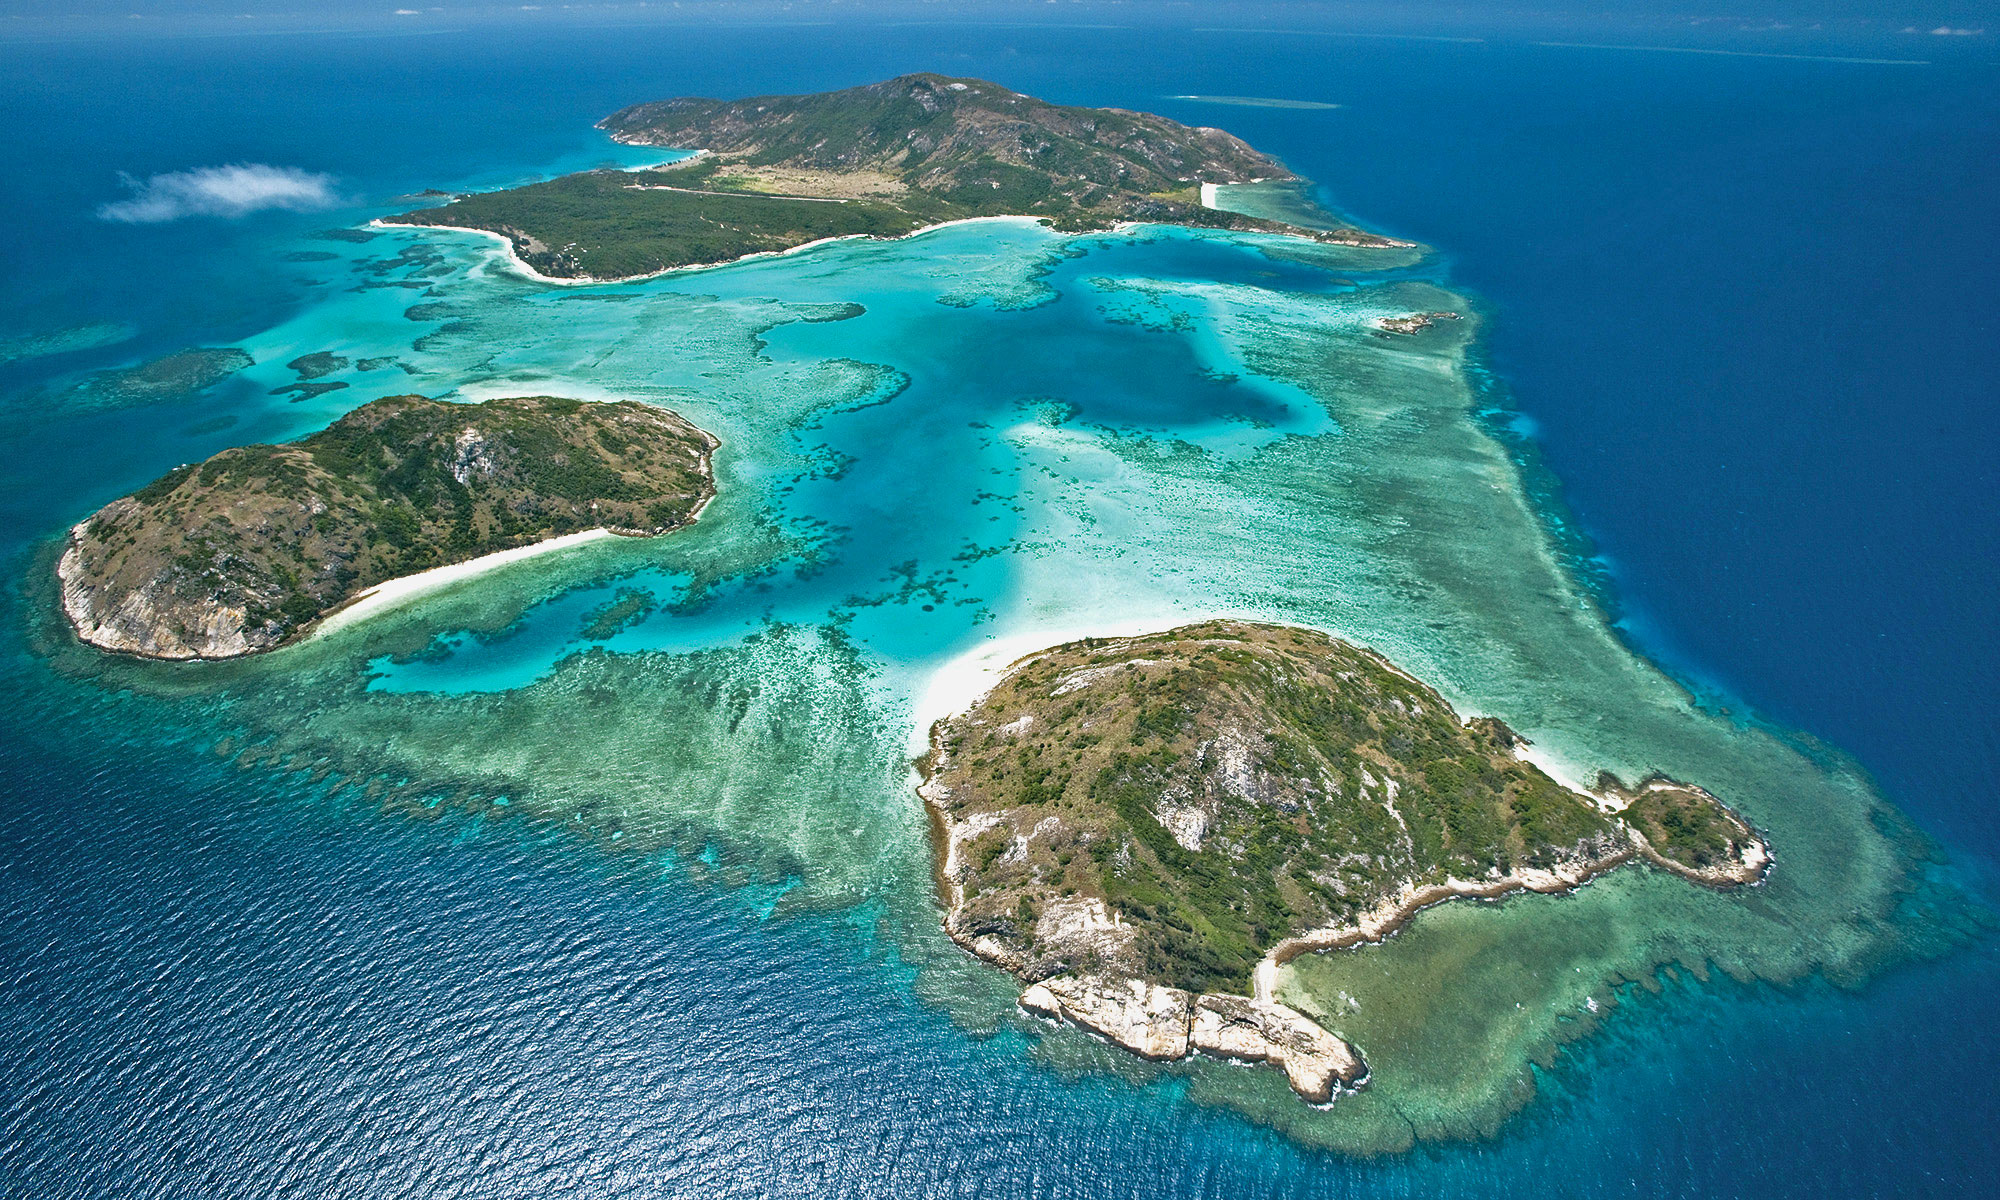 Aerial view of Lizard island